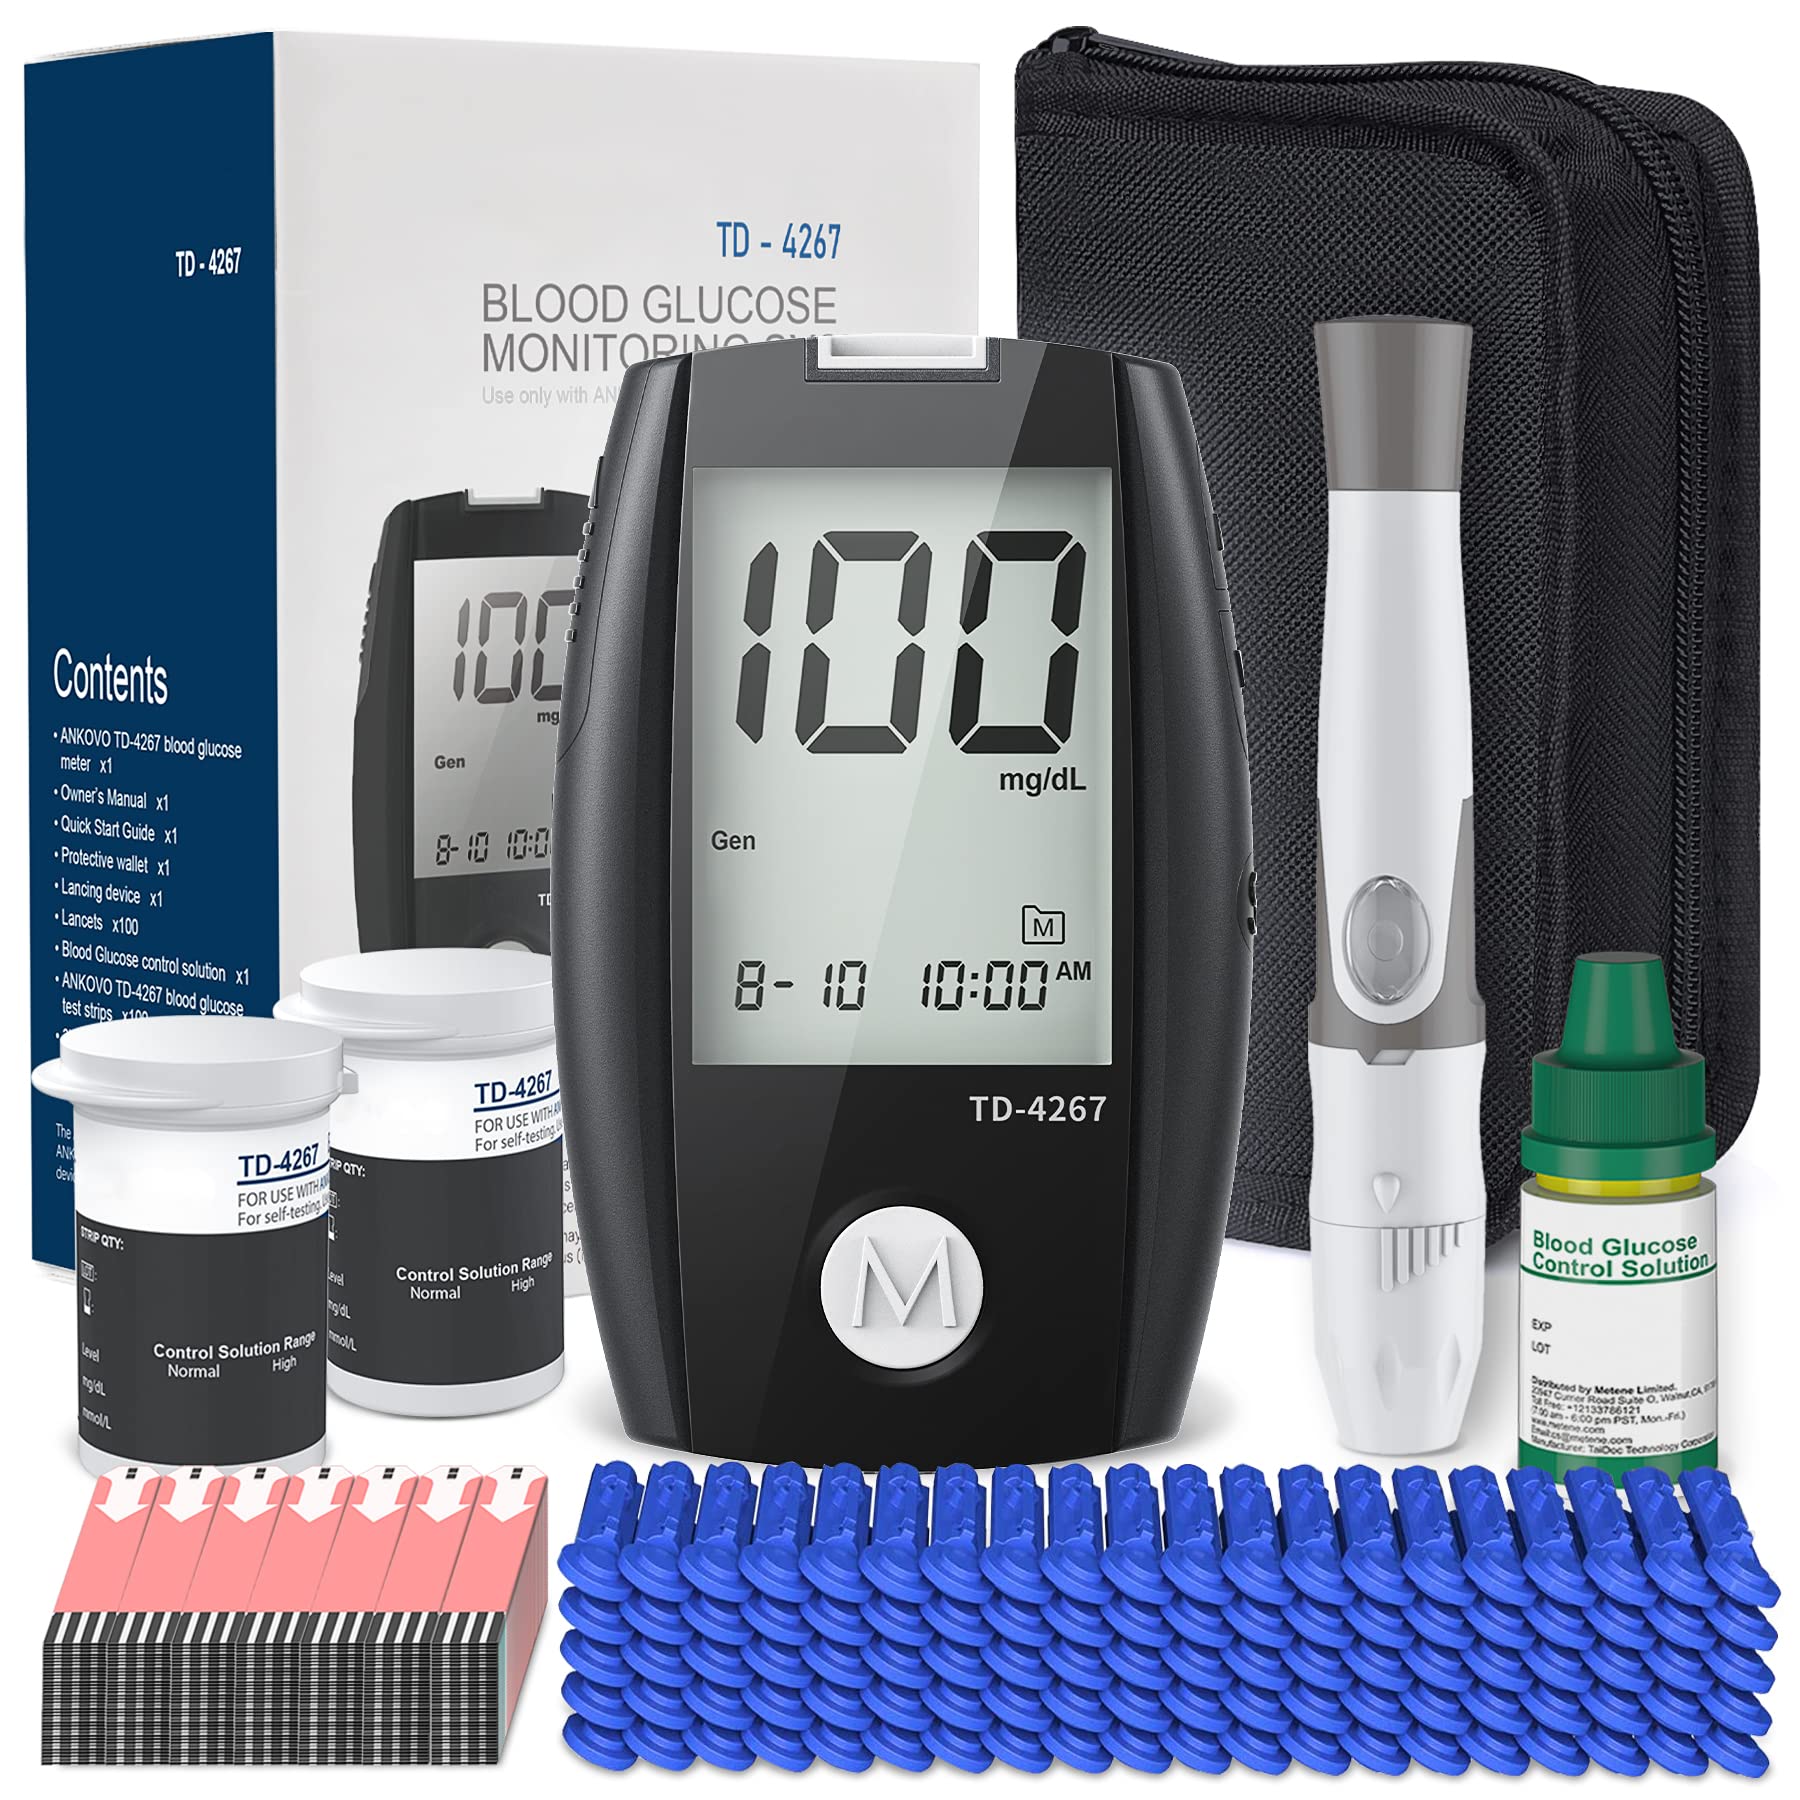 Cryfokt Blood Glucose Monitor Kit, Auto Coding Blood Pressure Monitor  Painless Testing Continuous Glucose Monitoring Diabetes Testing Kit Blood